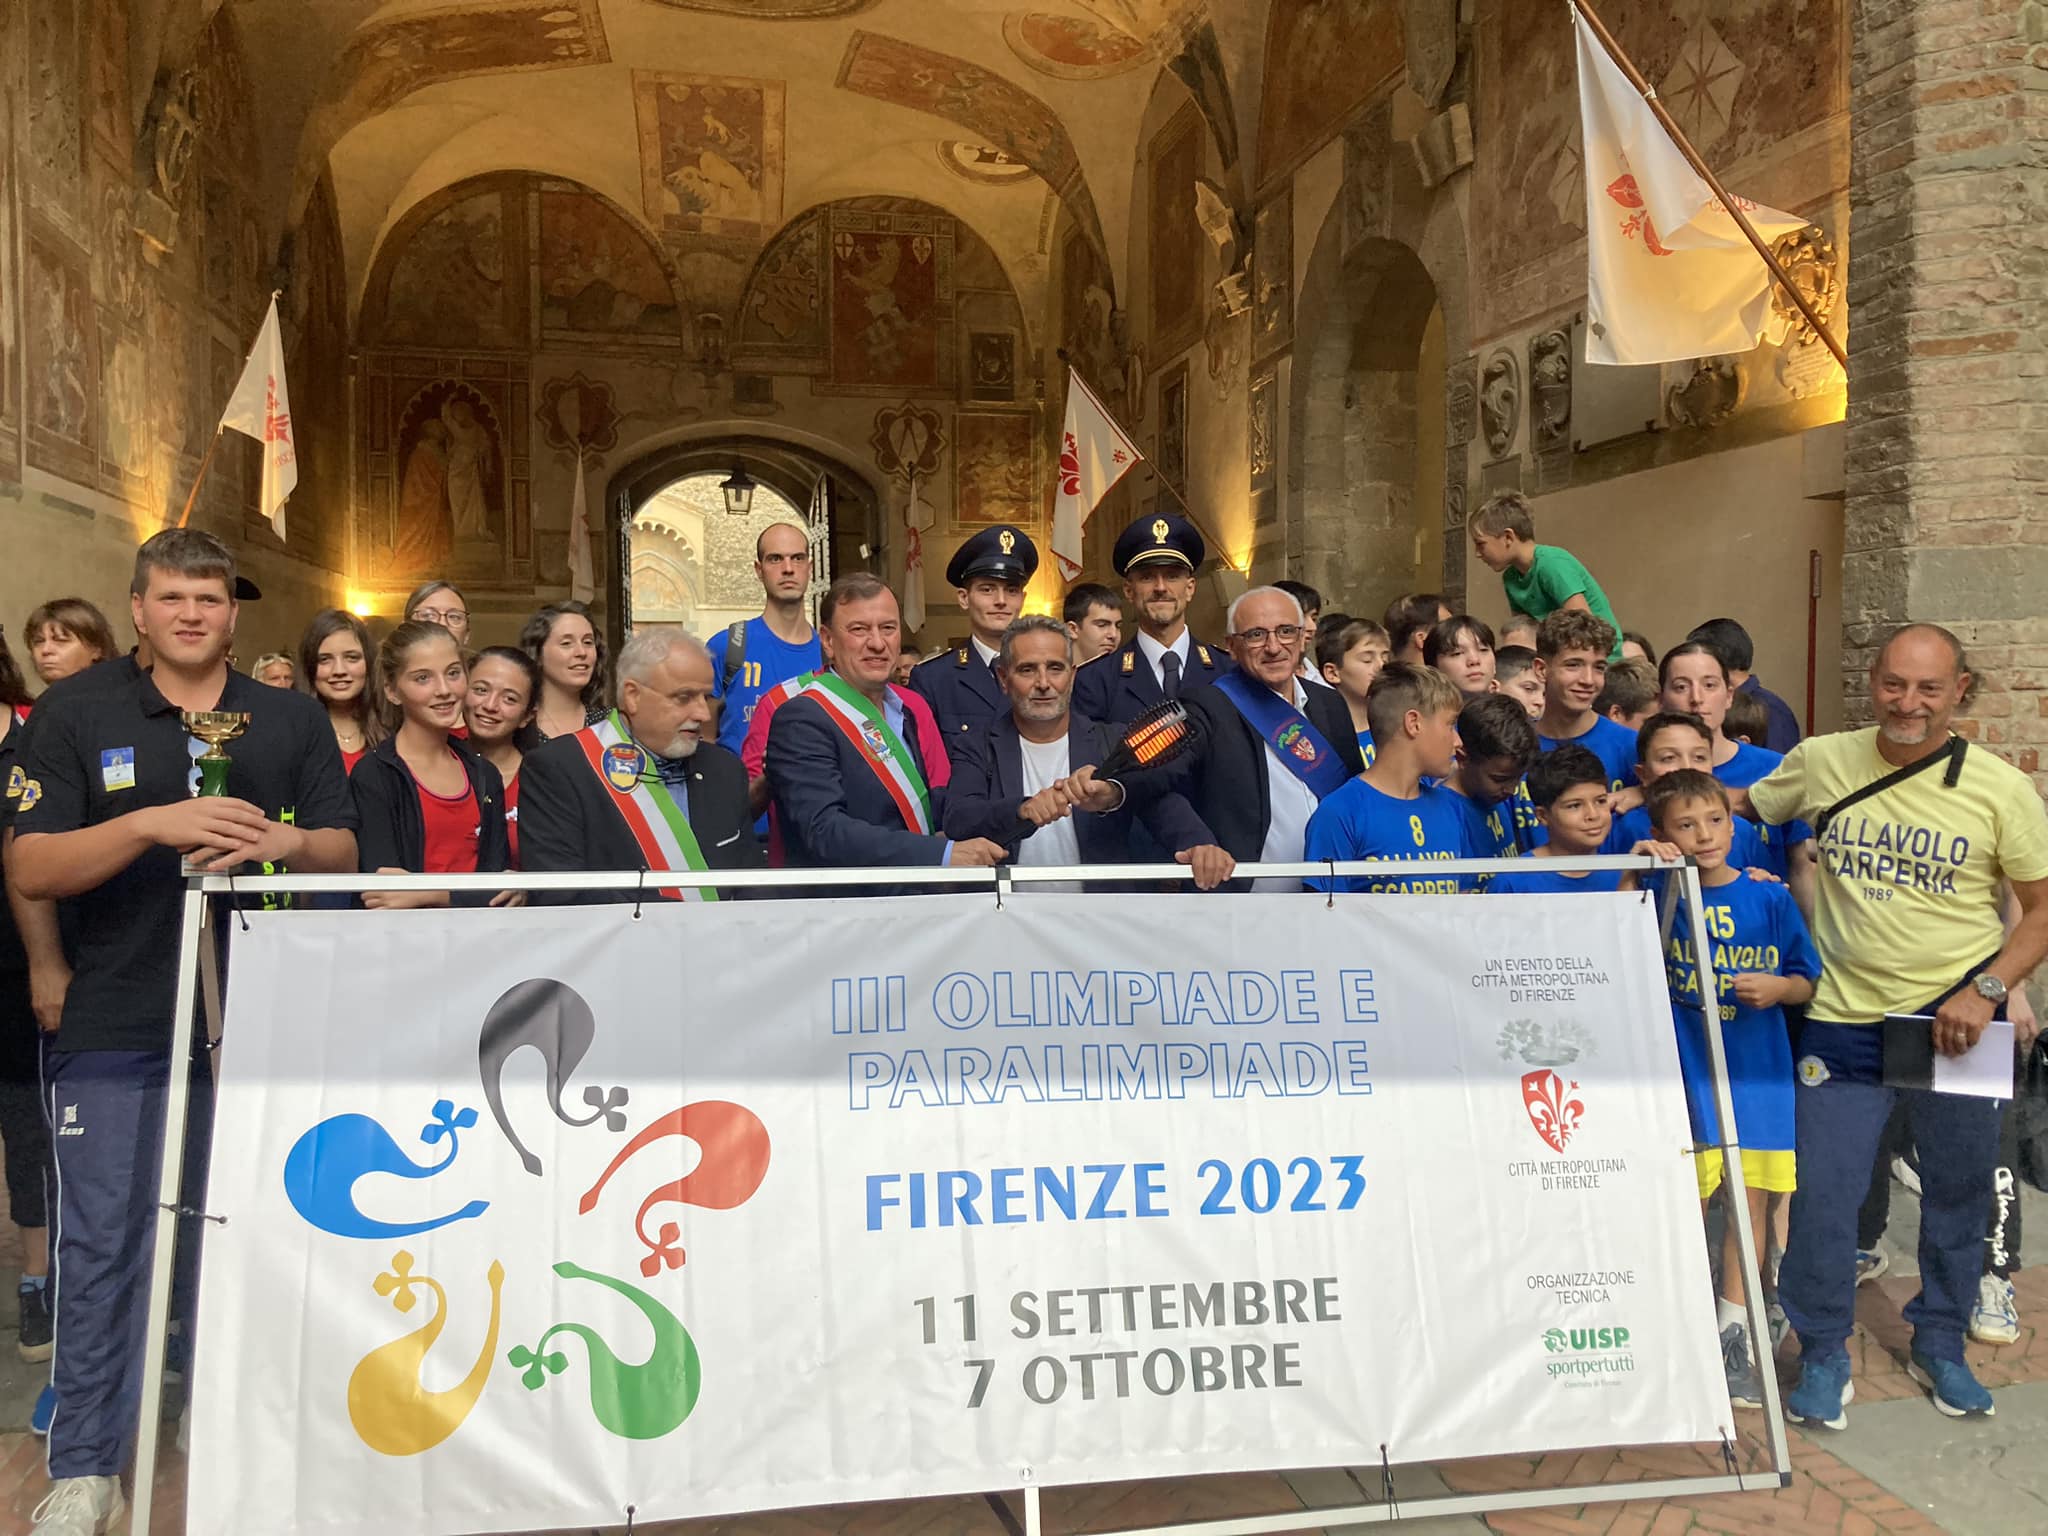 Foto di gruppo durante la cerimonia di chiusura (foto da Uisp Firenze)